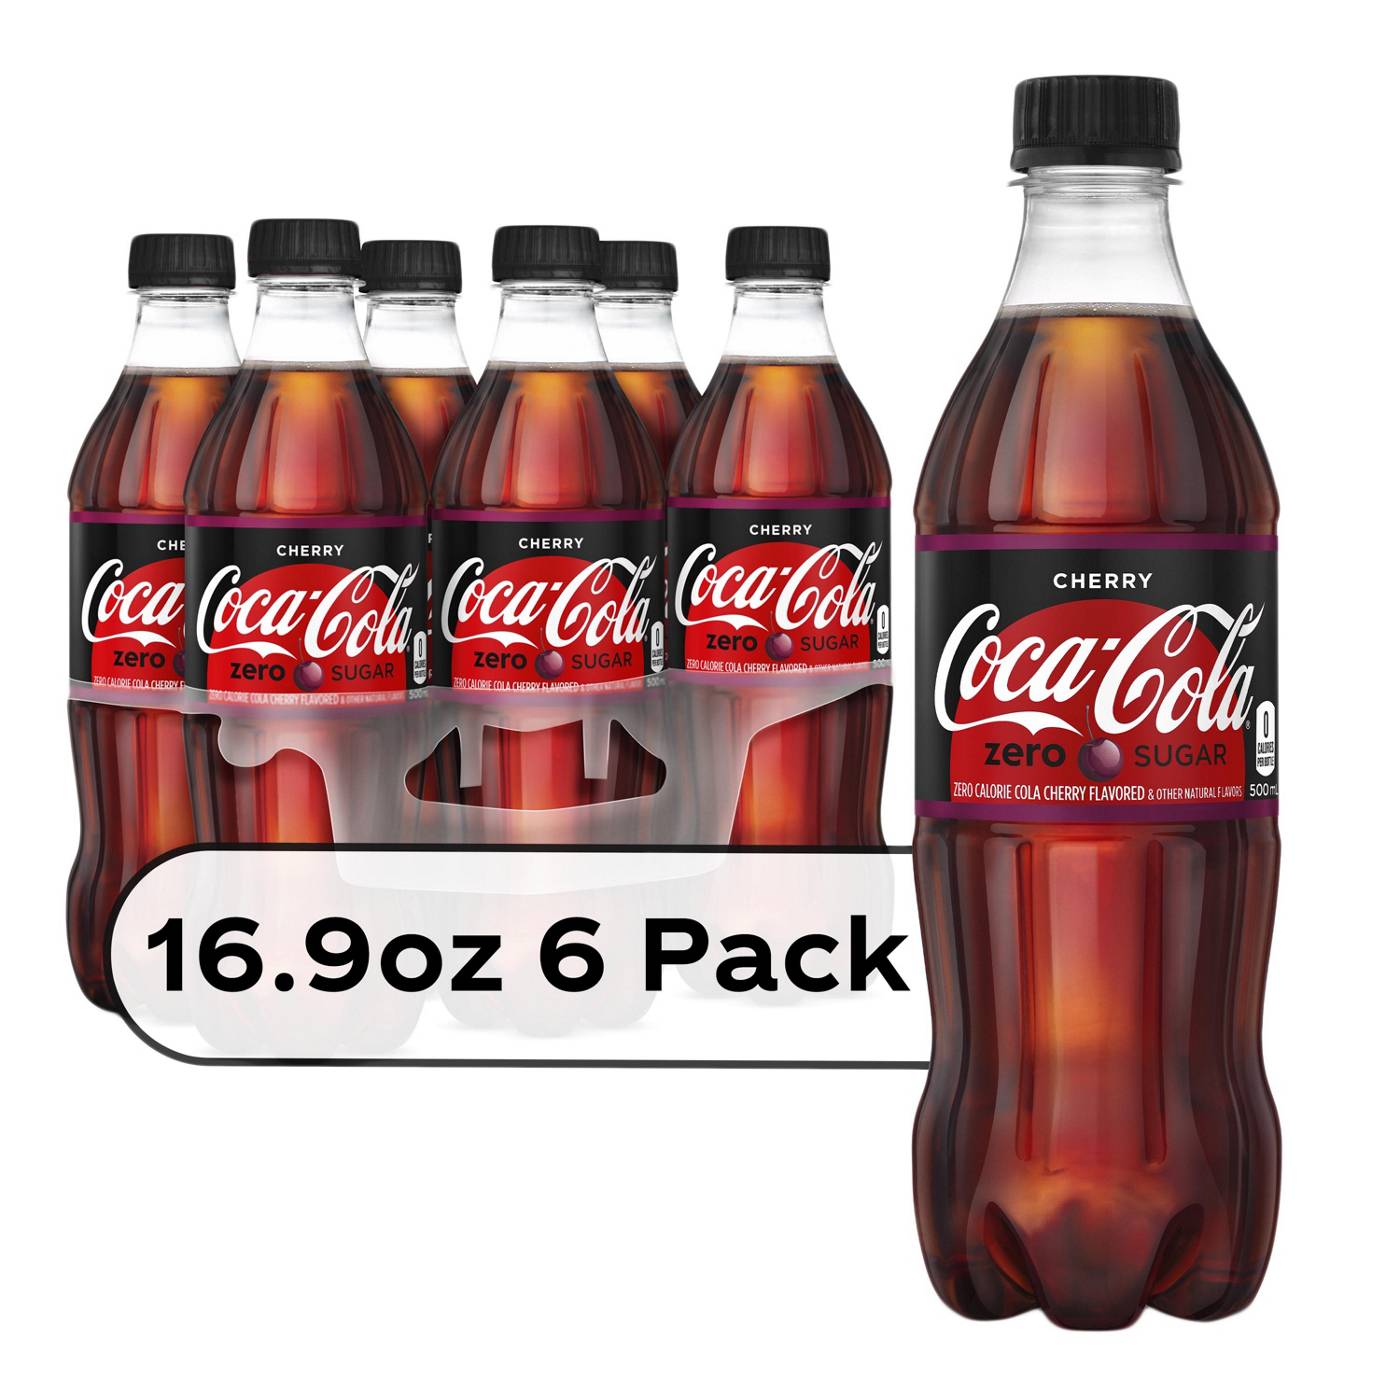 Coca-Cola Cherry Coke Zero Sugar 16.9 oz Bottles; image 4 of 7